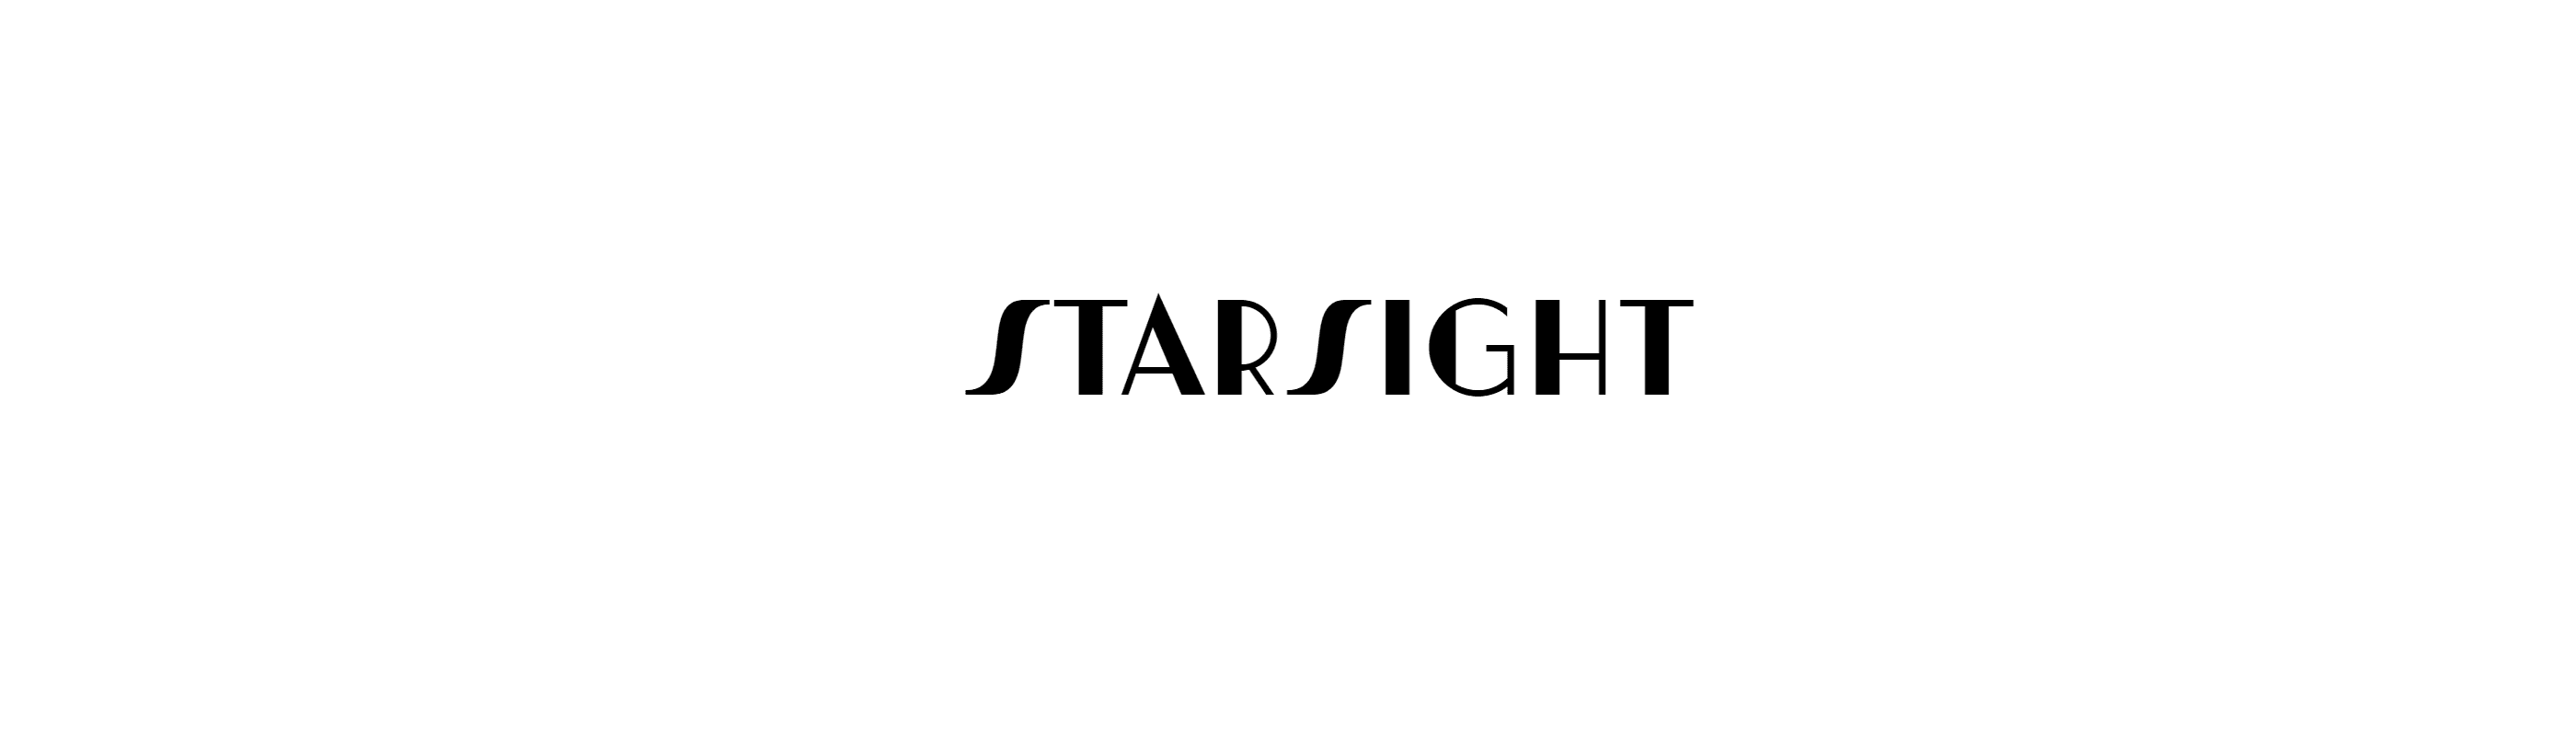 starsight バナー